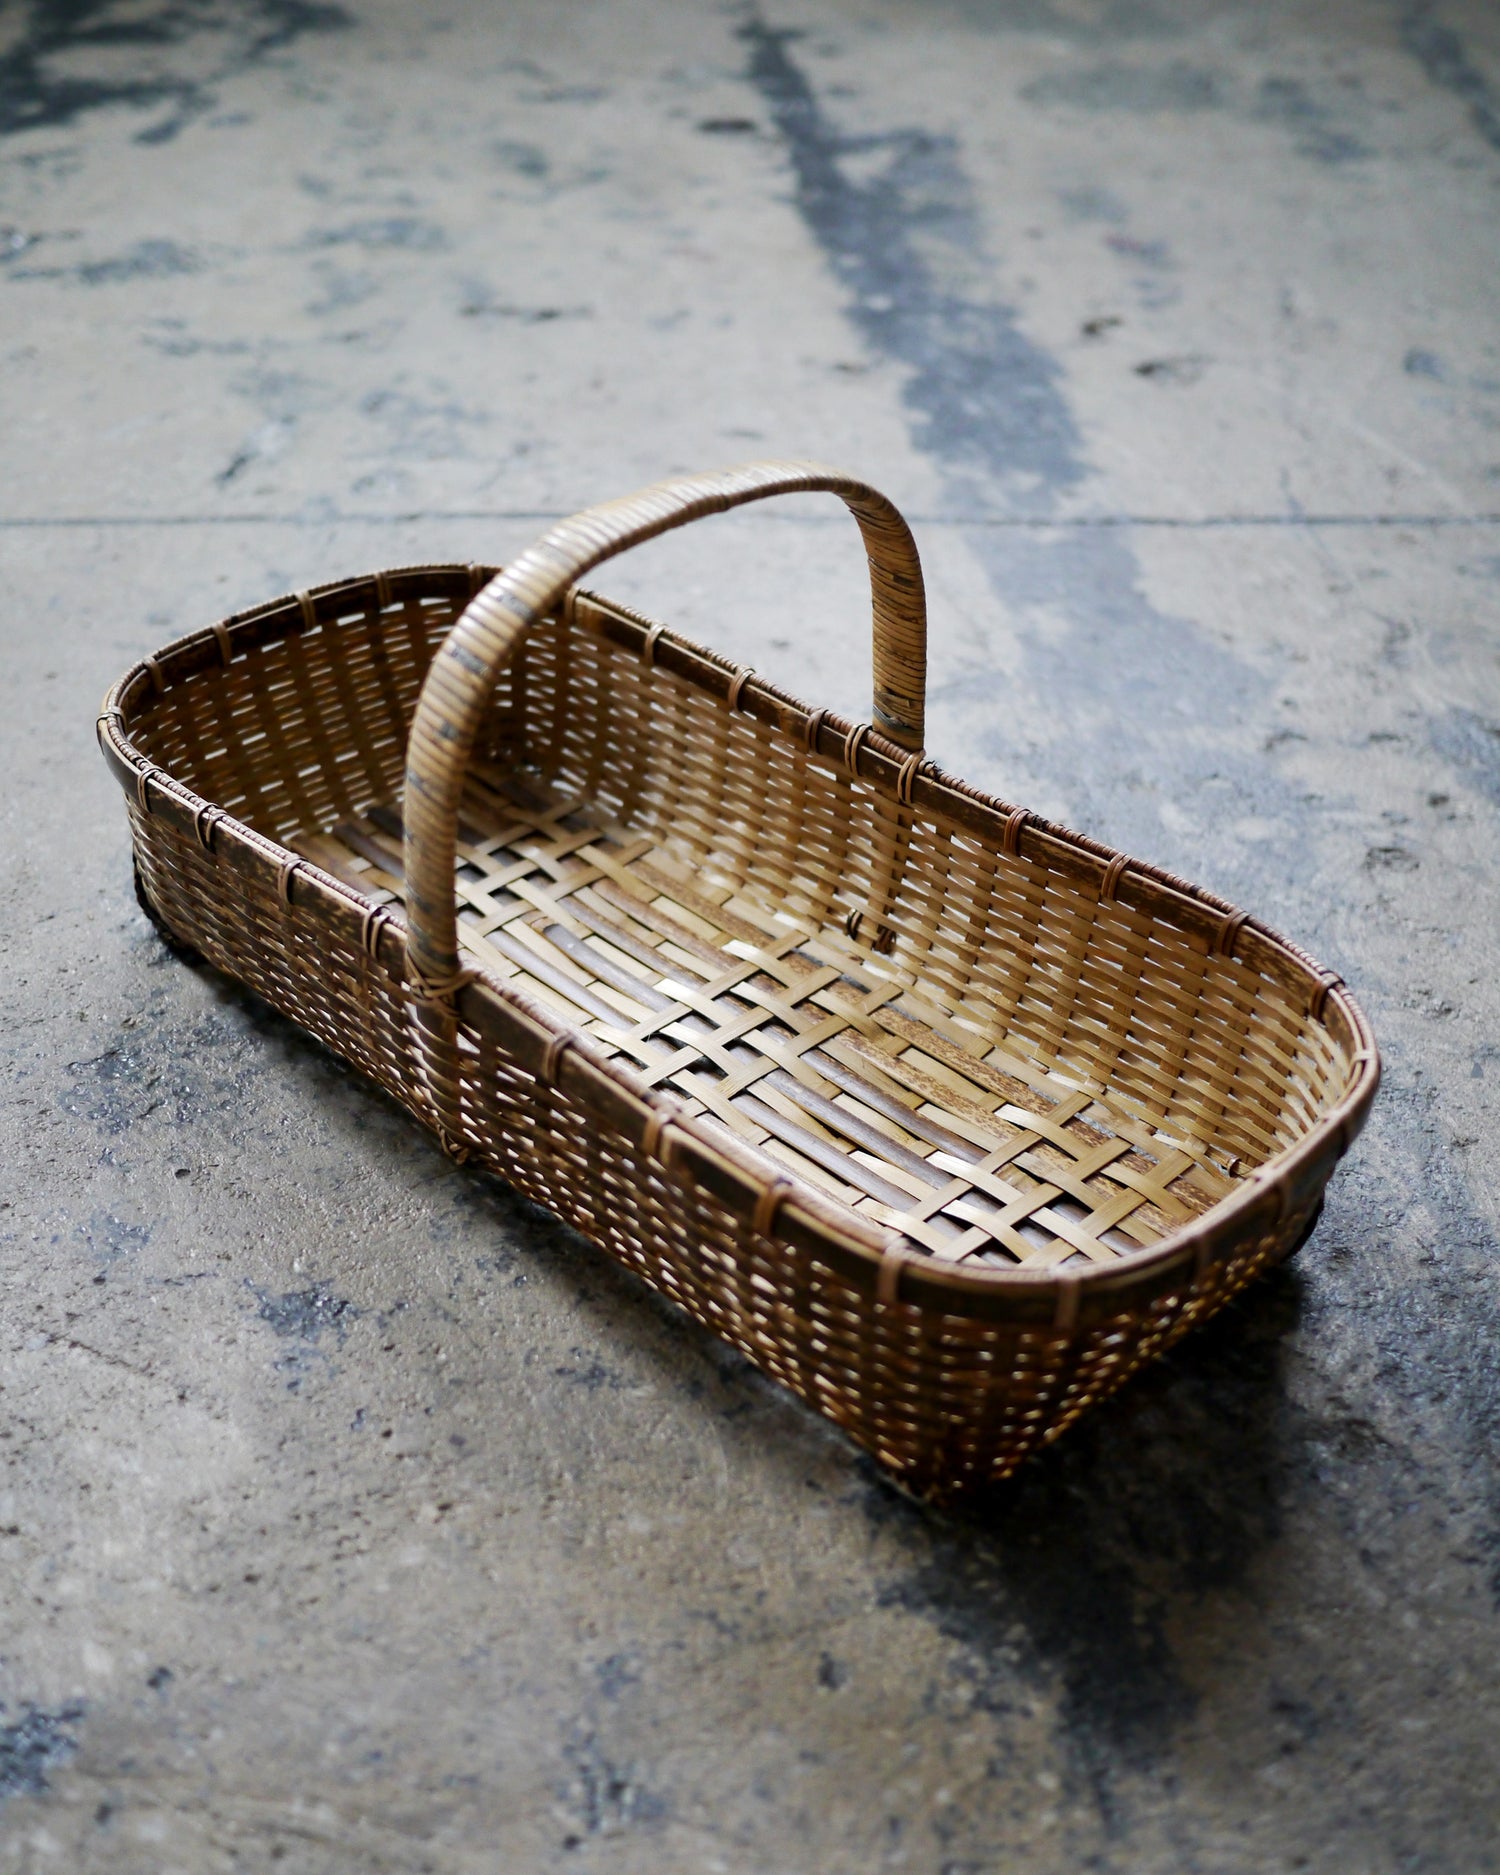 Bird's-eye-view of long toradake bread basket with handle by Kohchosai Kosuga on dark concrete floor.